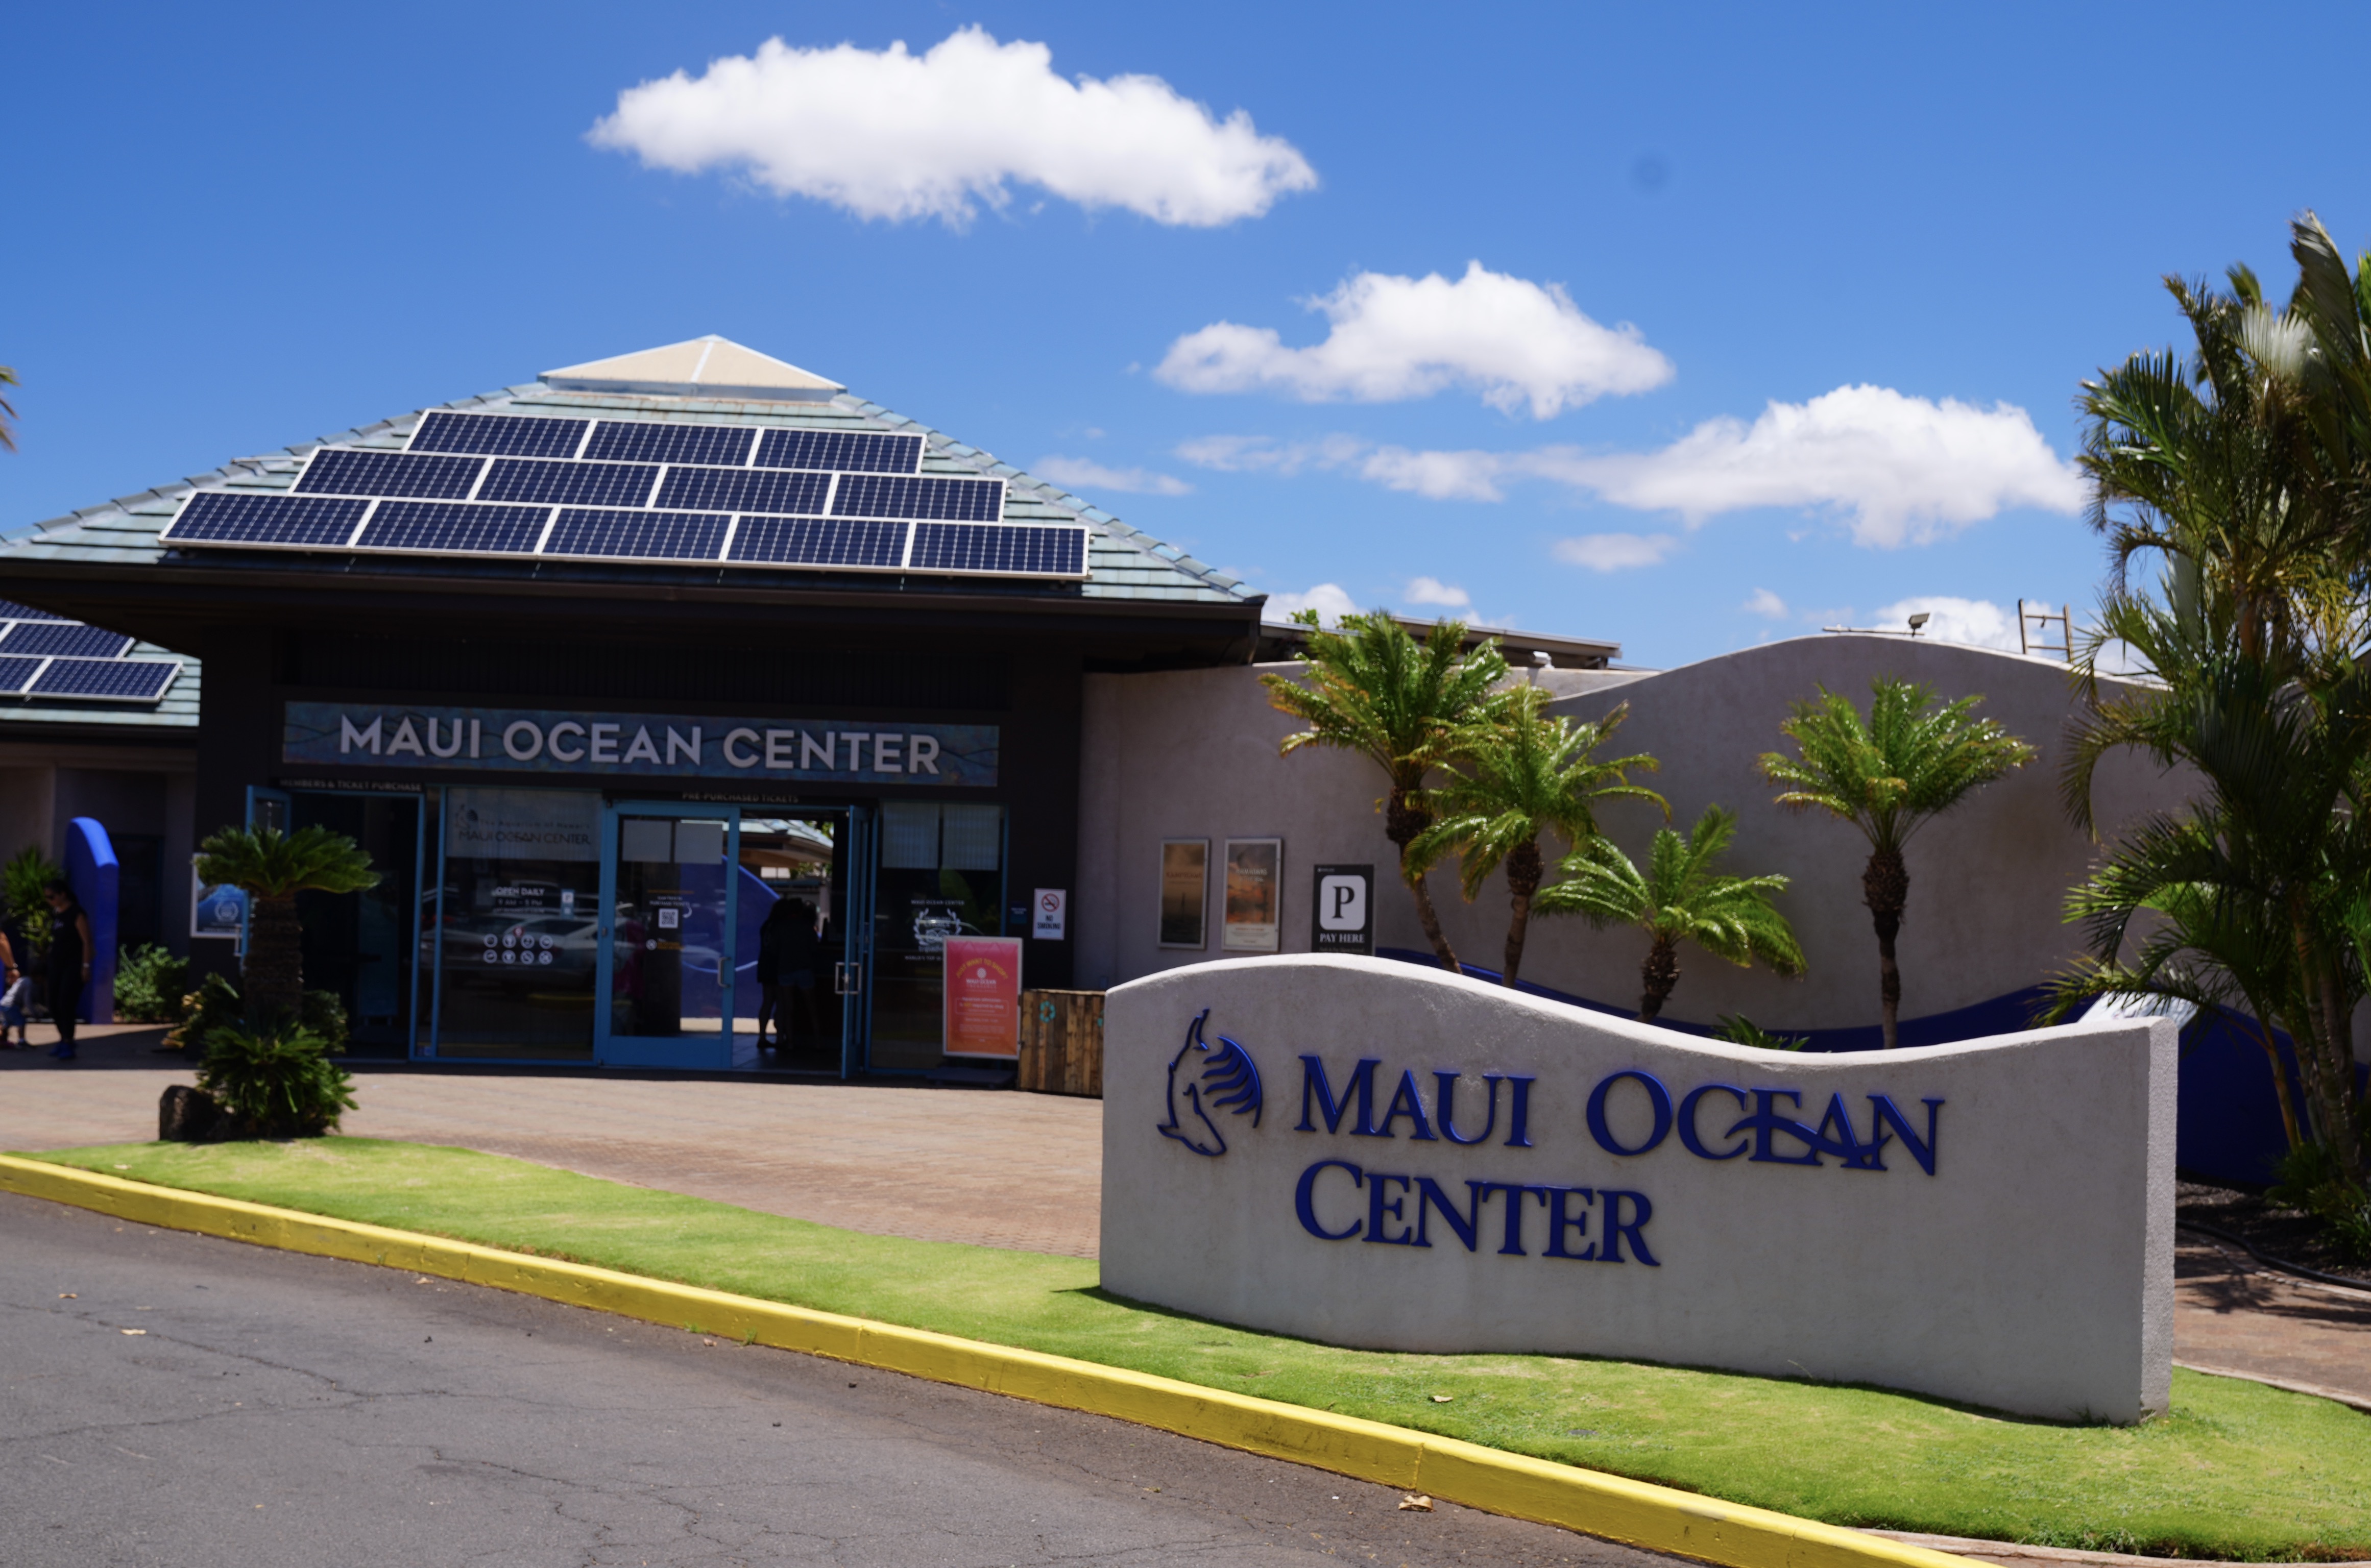 #12 Maui Ocean Center, Hawaii